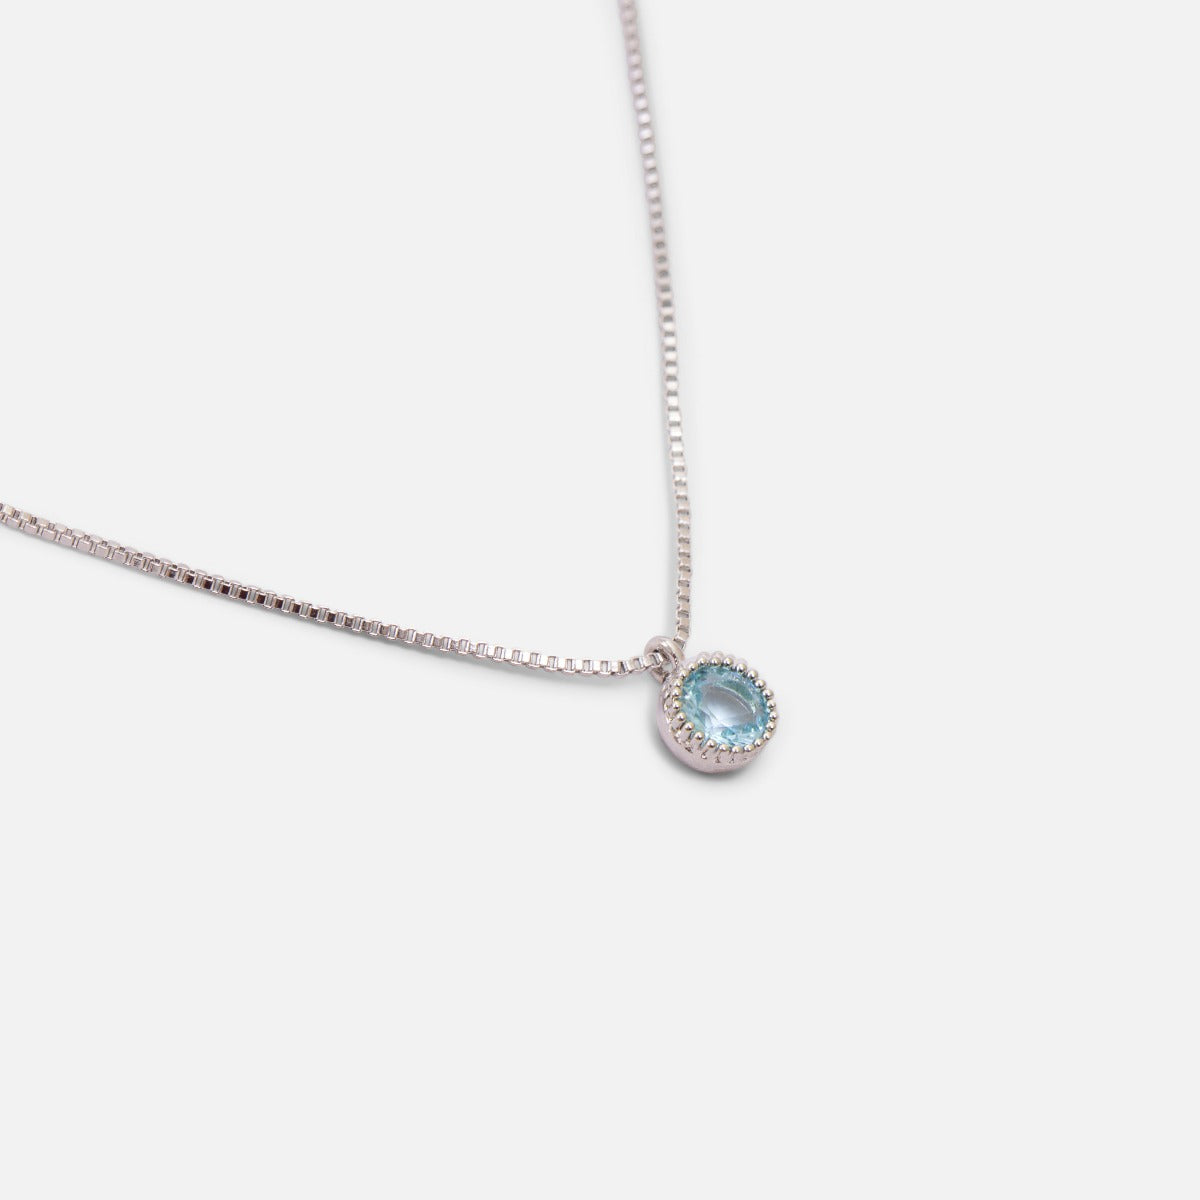 Silvered pendant birthstone " aquamarine stone "